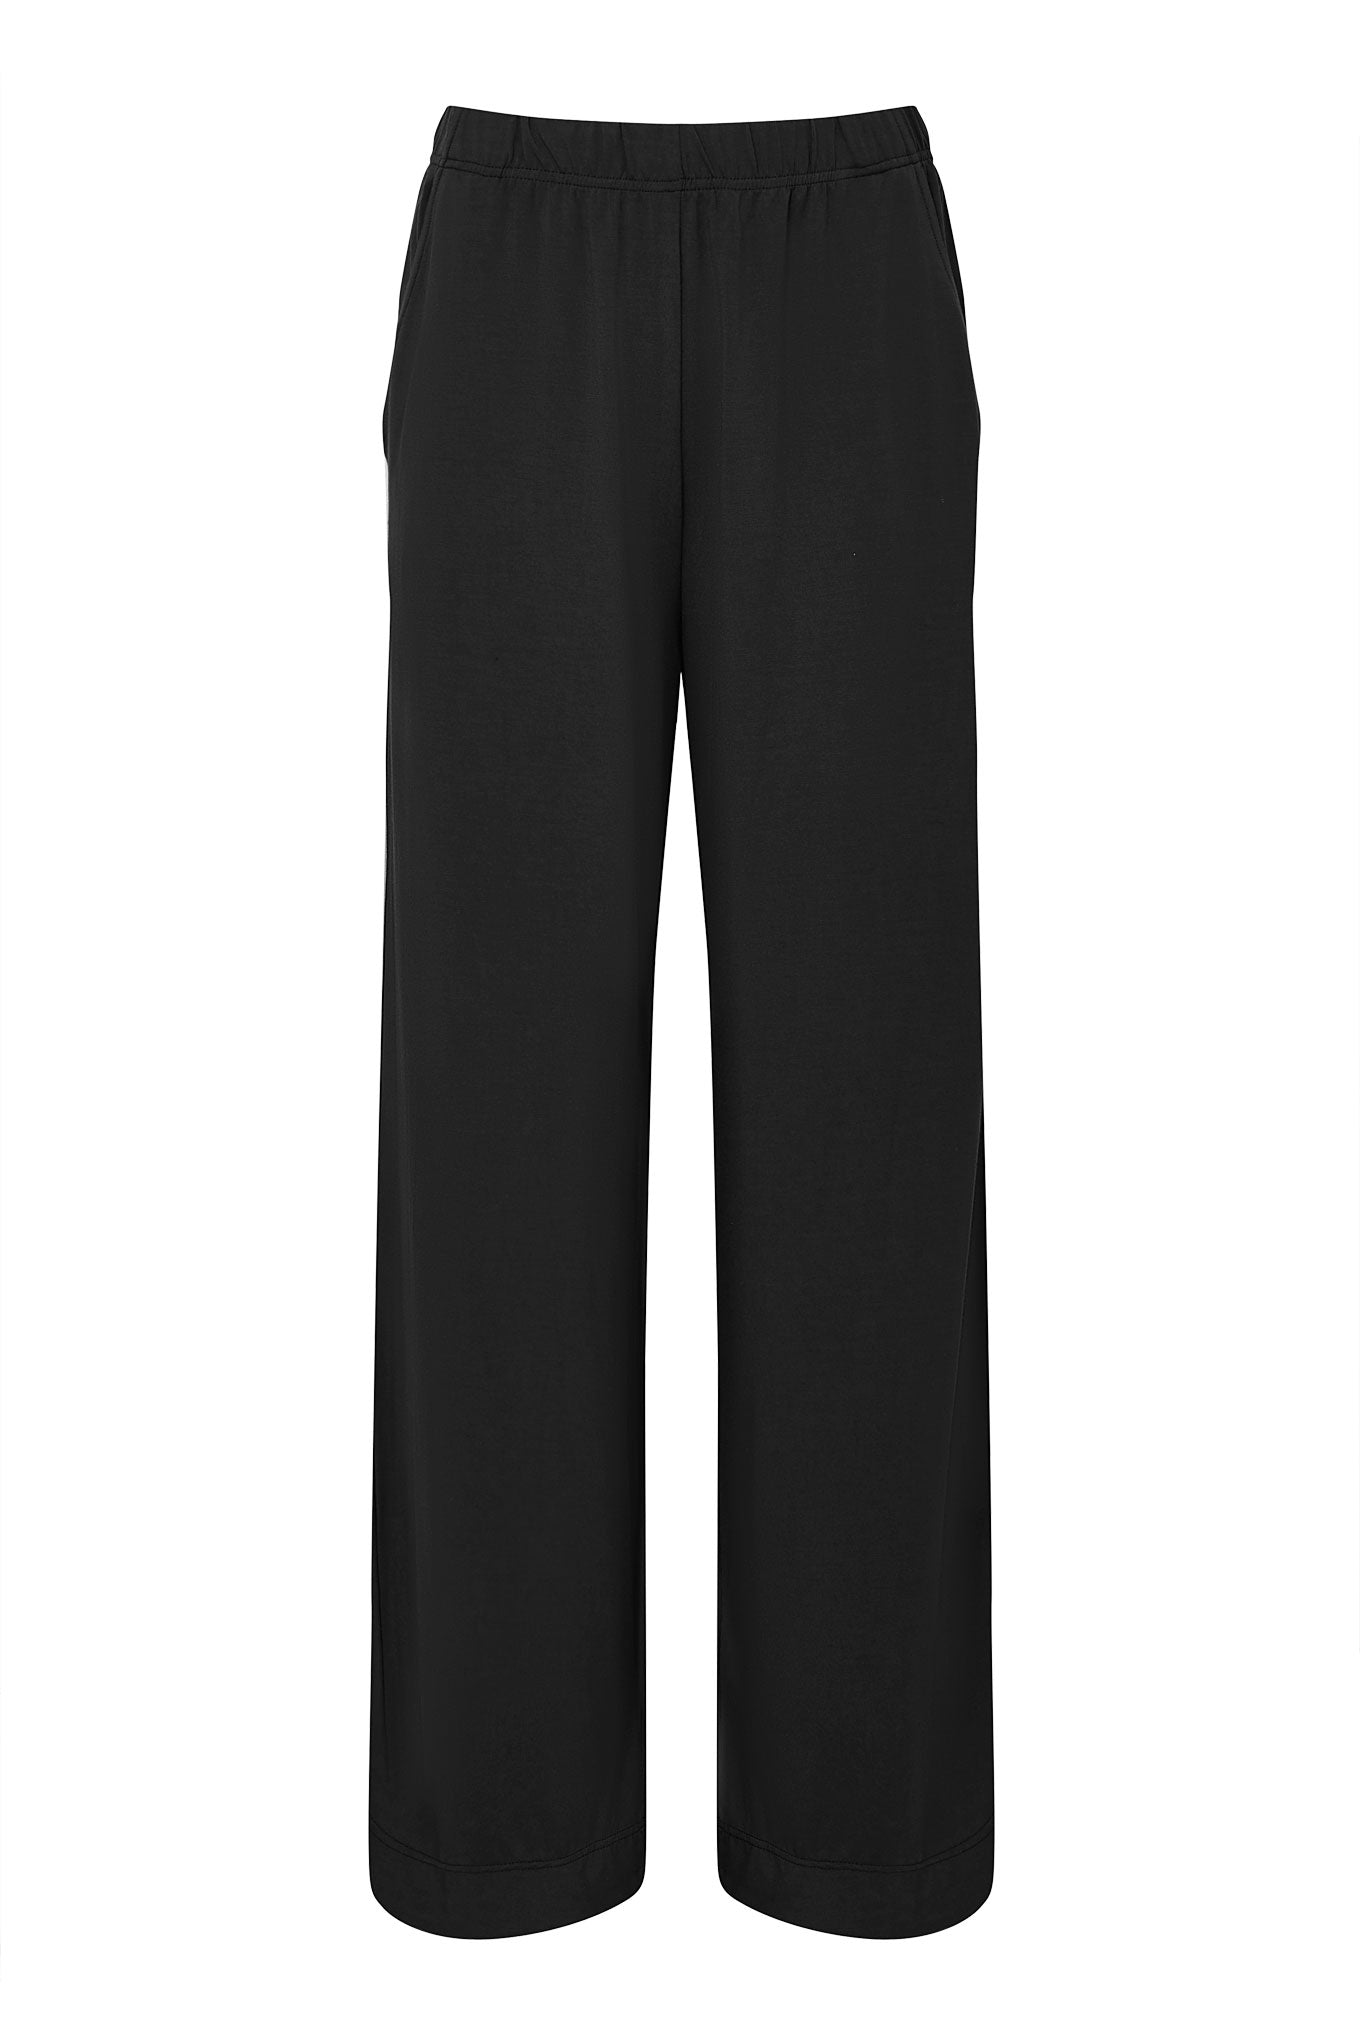 BINITA - Lenzing trousers black